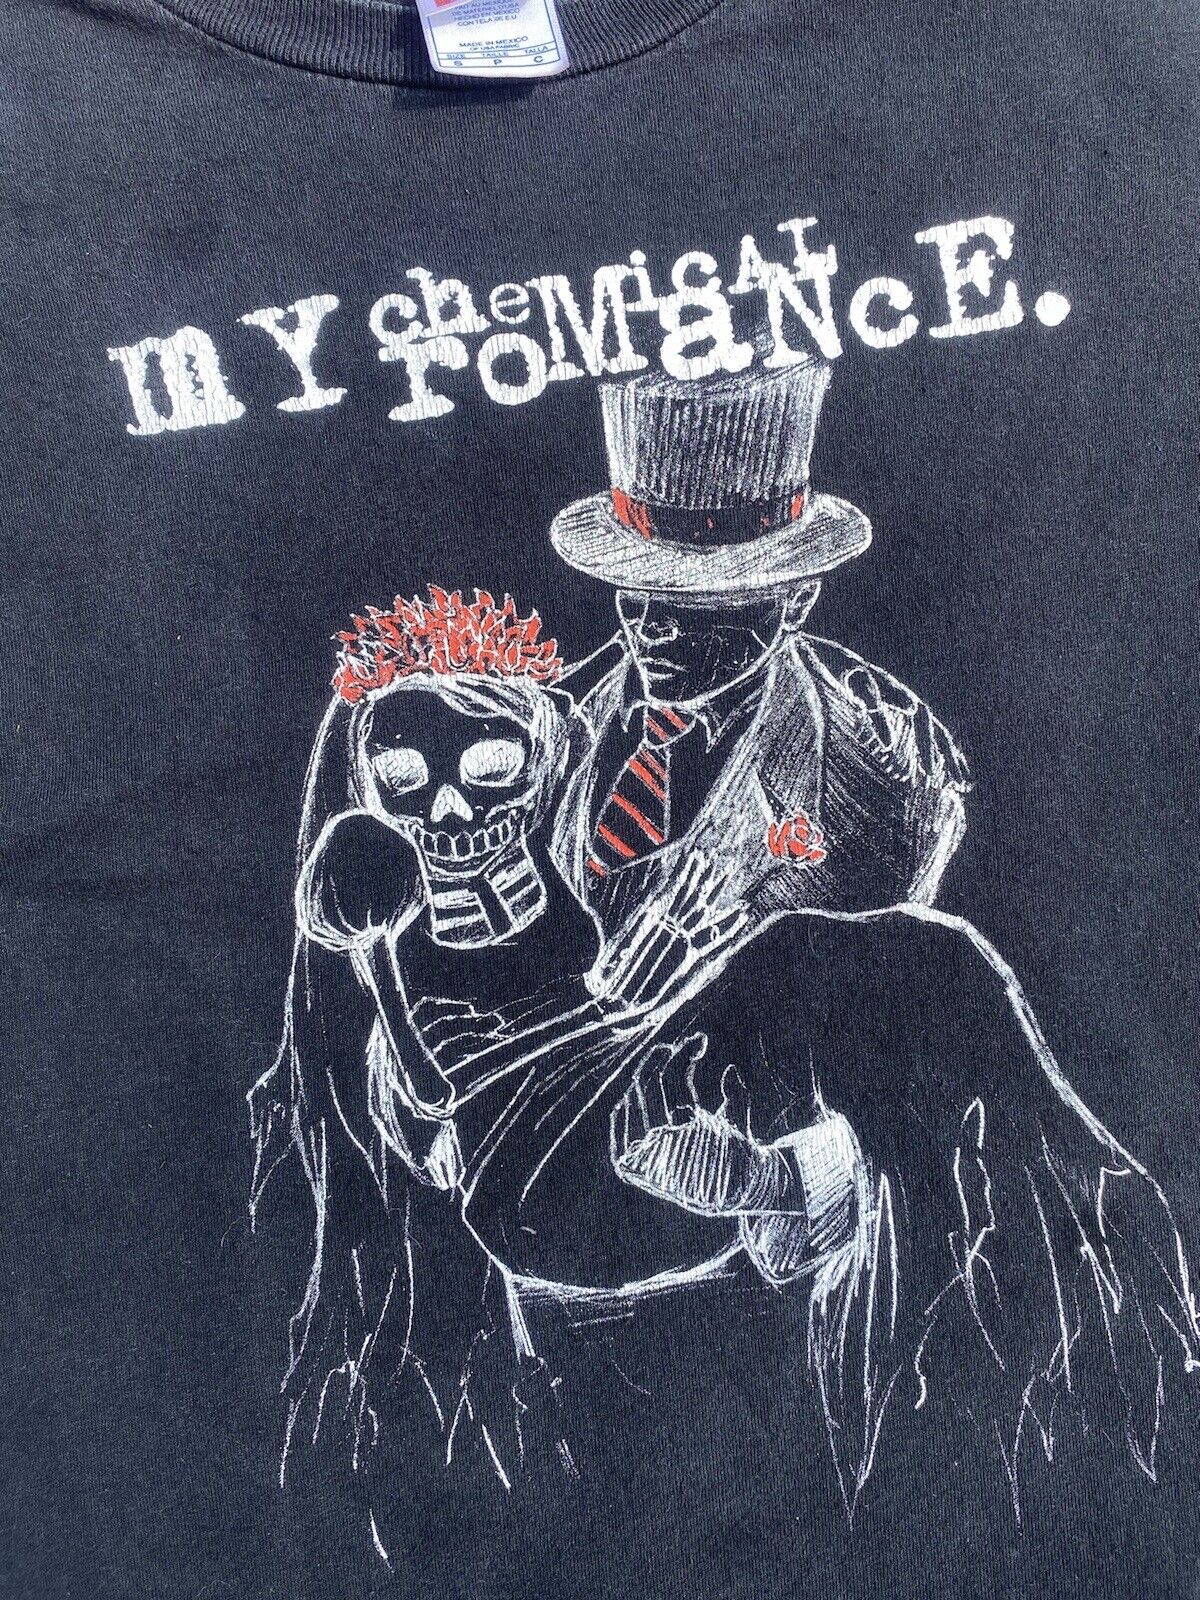 Vintage Rare My Chemical Romance Band Concert Tour Shirt SMALL 